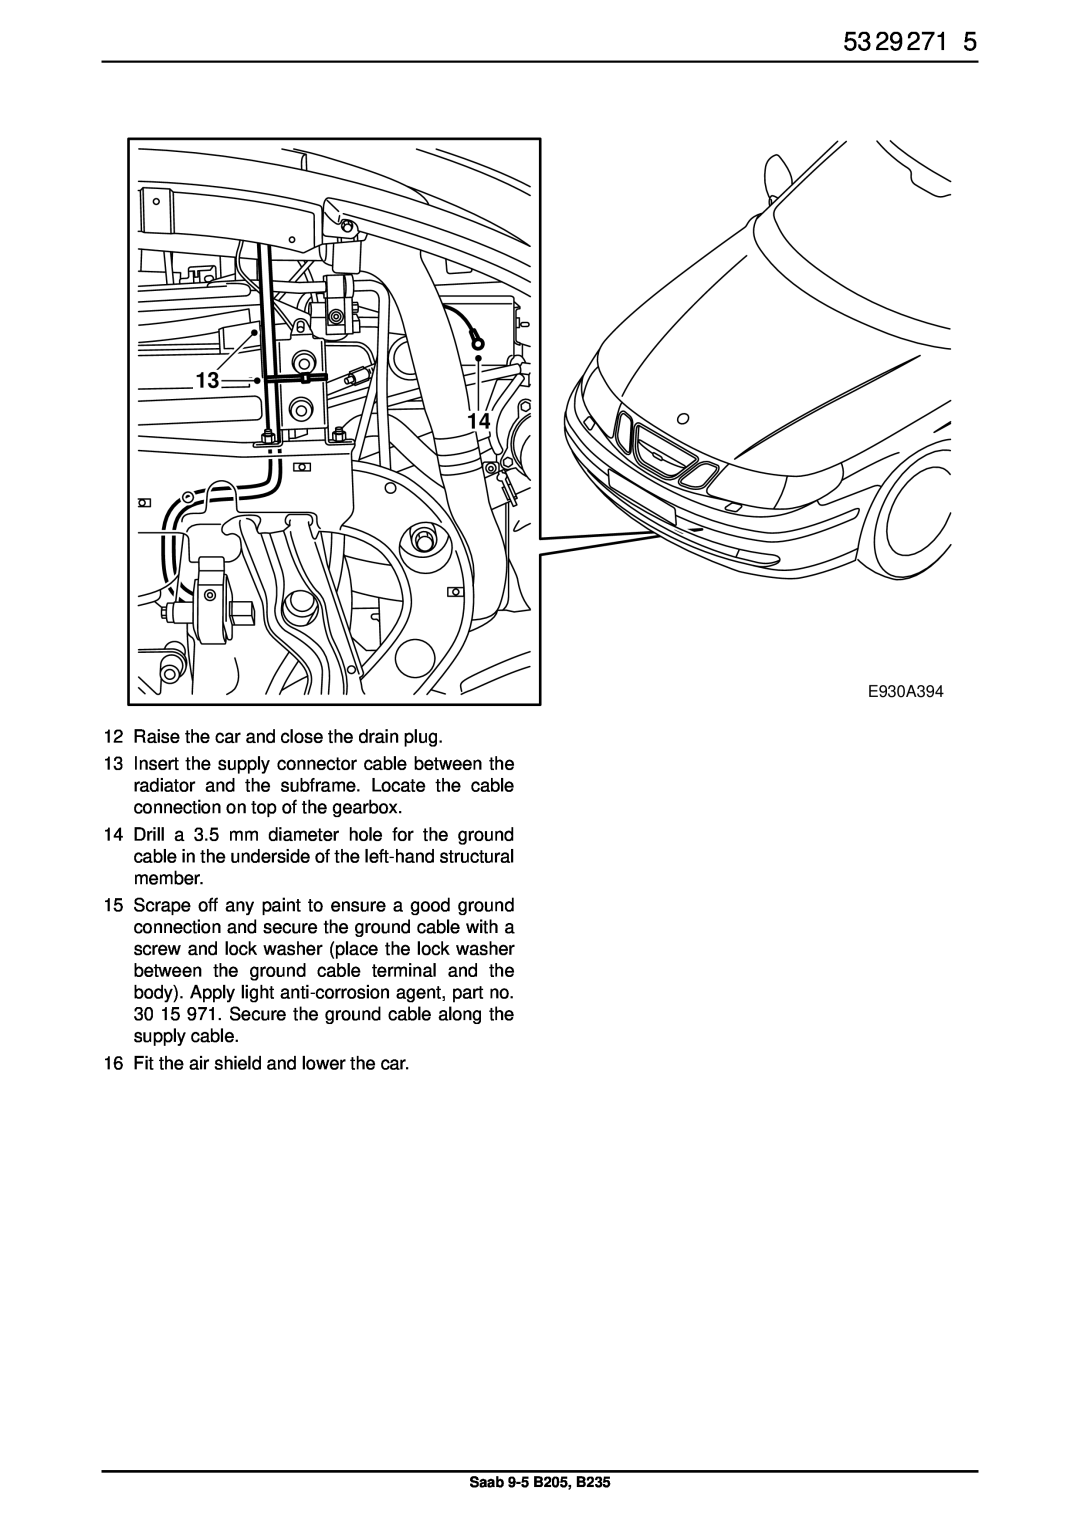 Saab B205, B235 installation instructions Raise the car and close the drain plug 